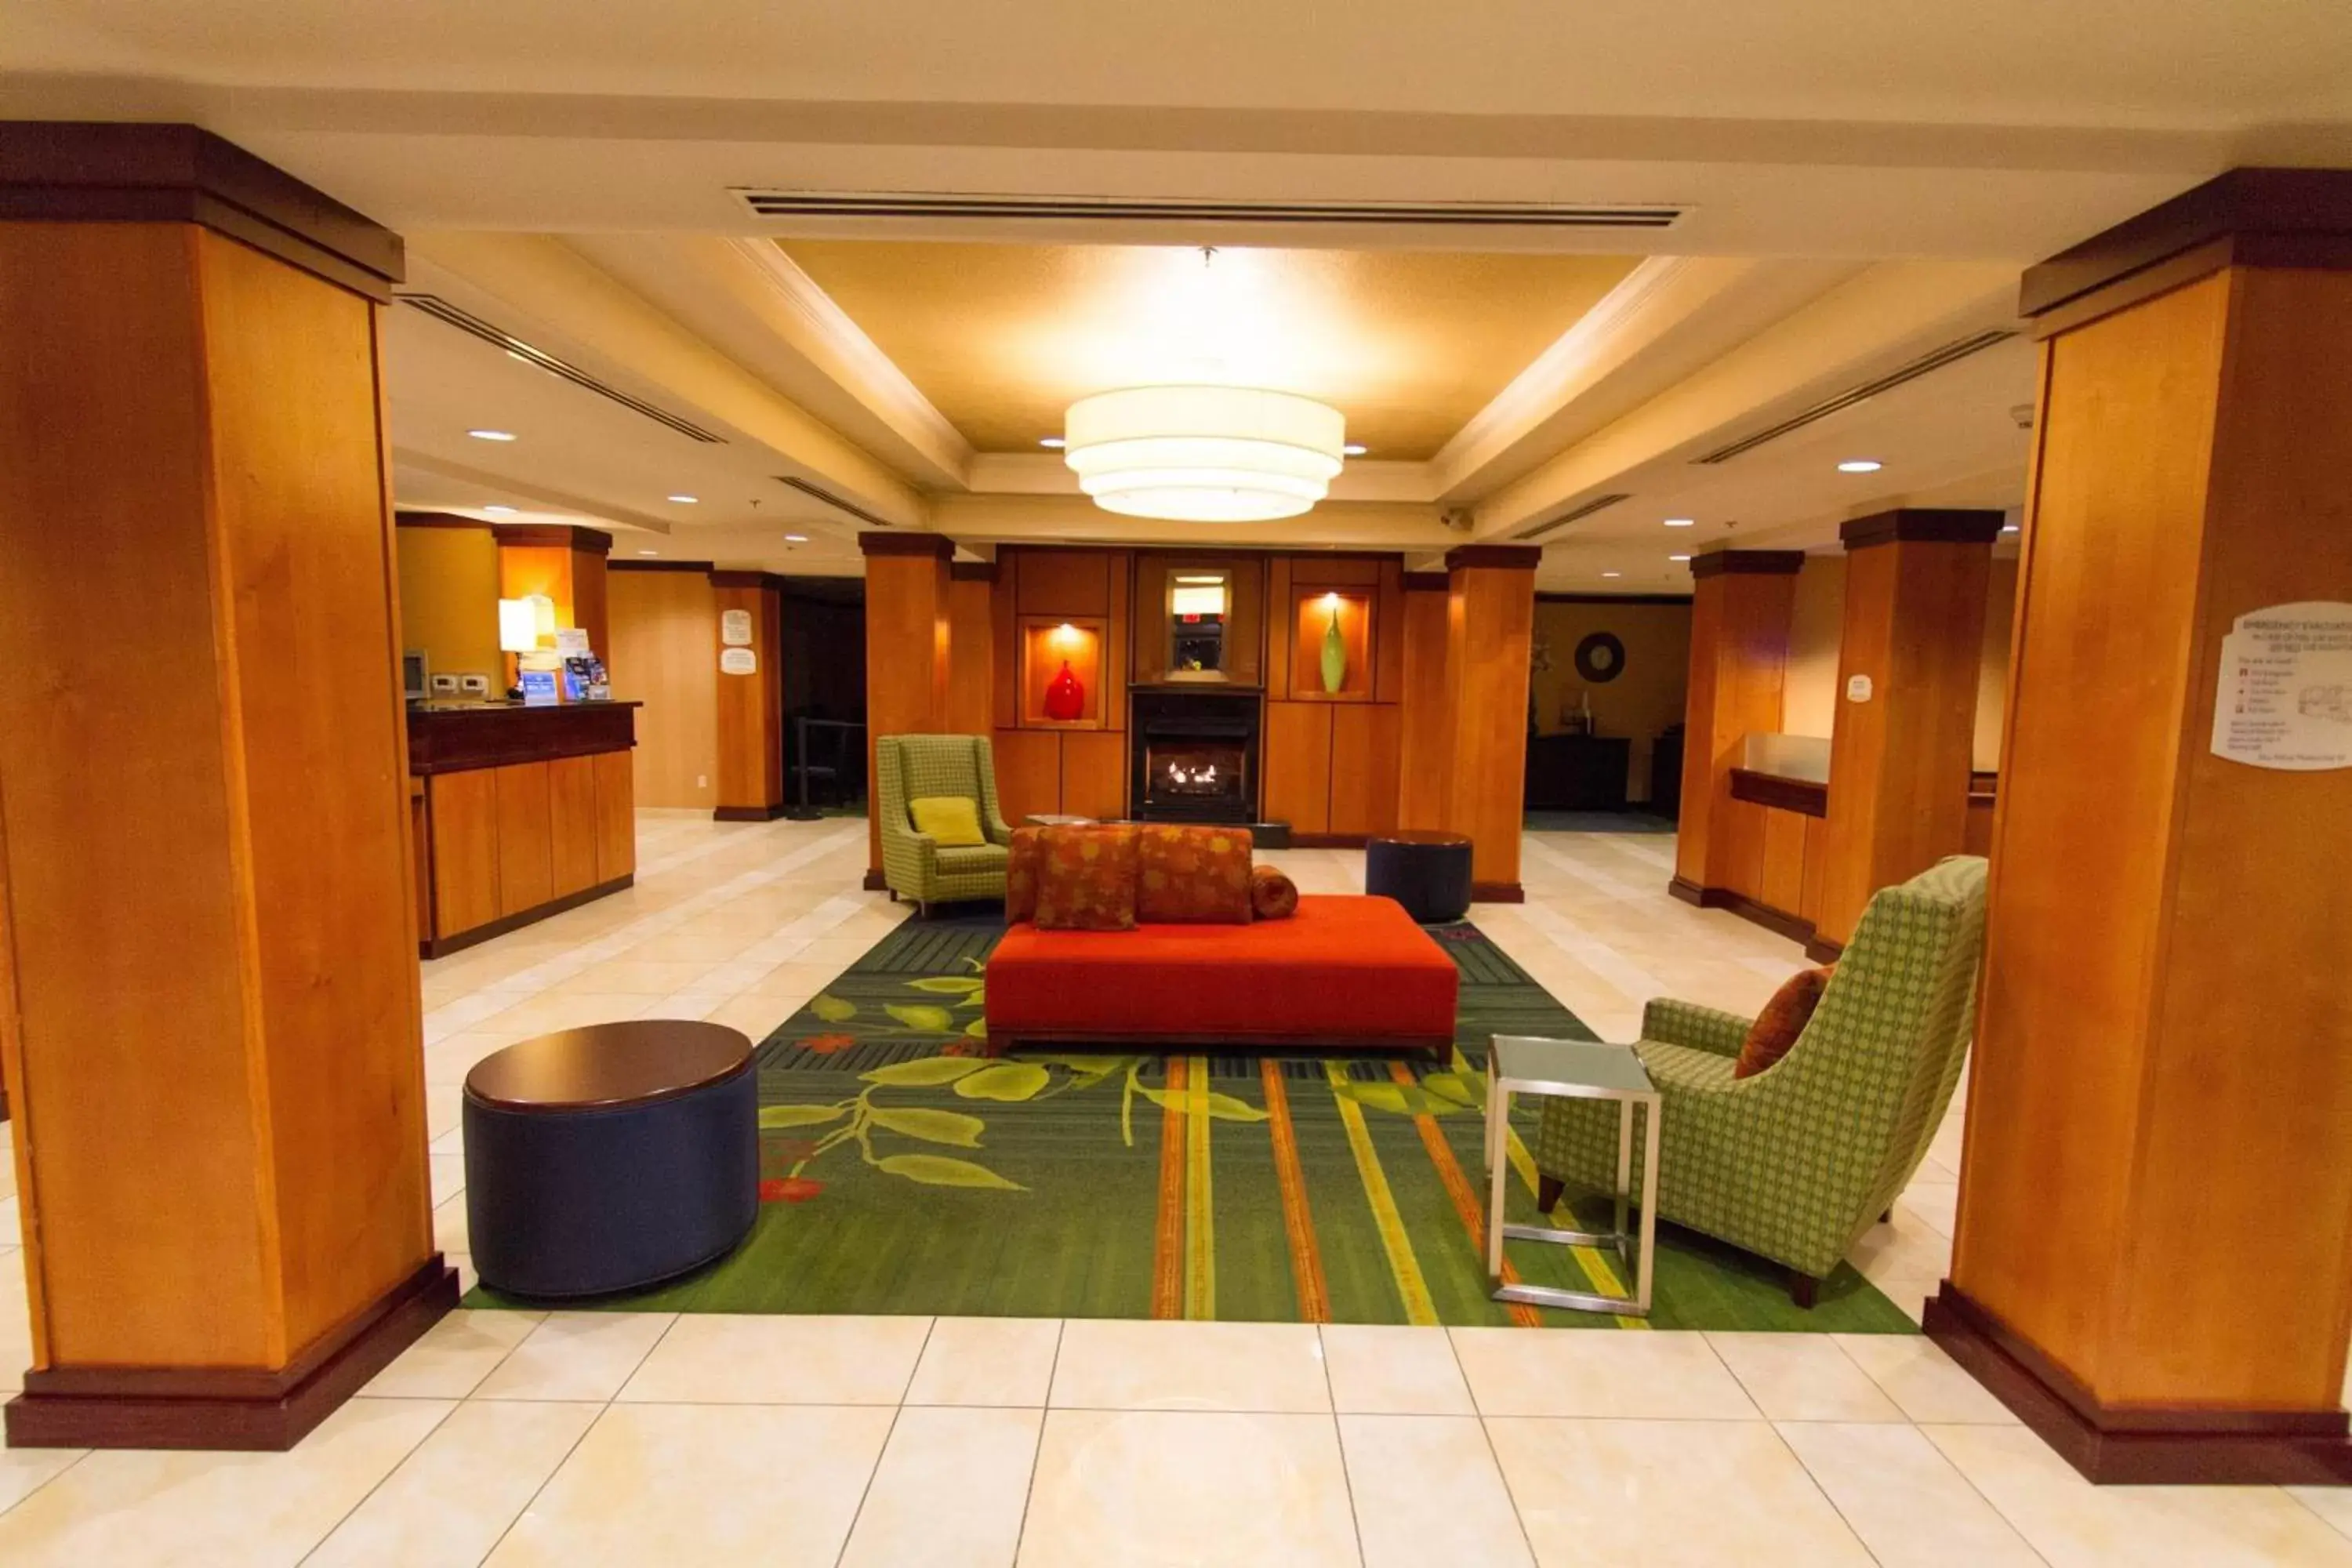 Lobby or reception in Fairfield Inn & Suites Santa Maria